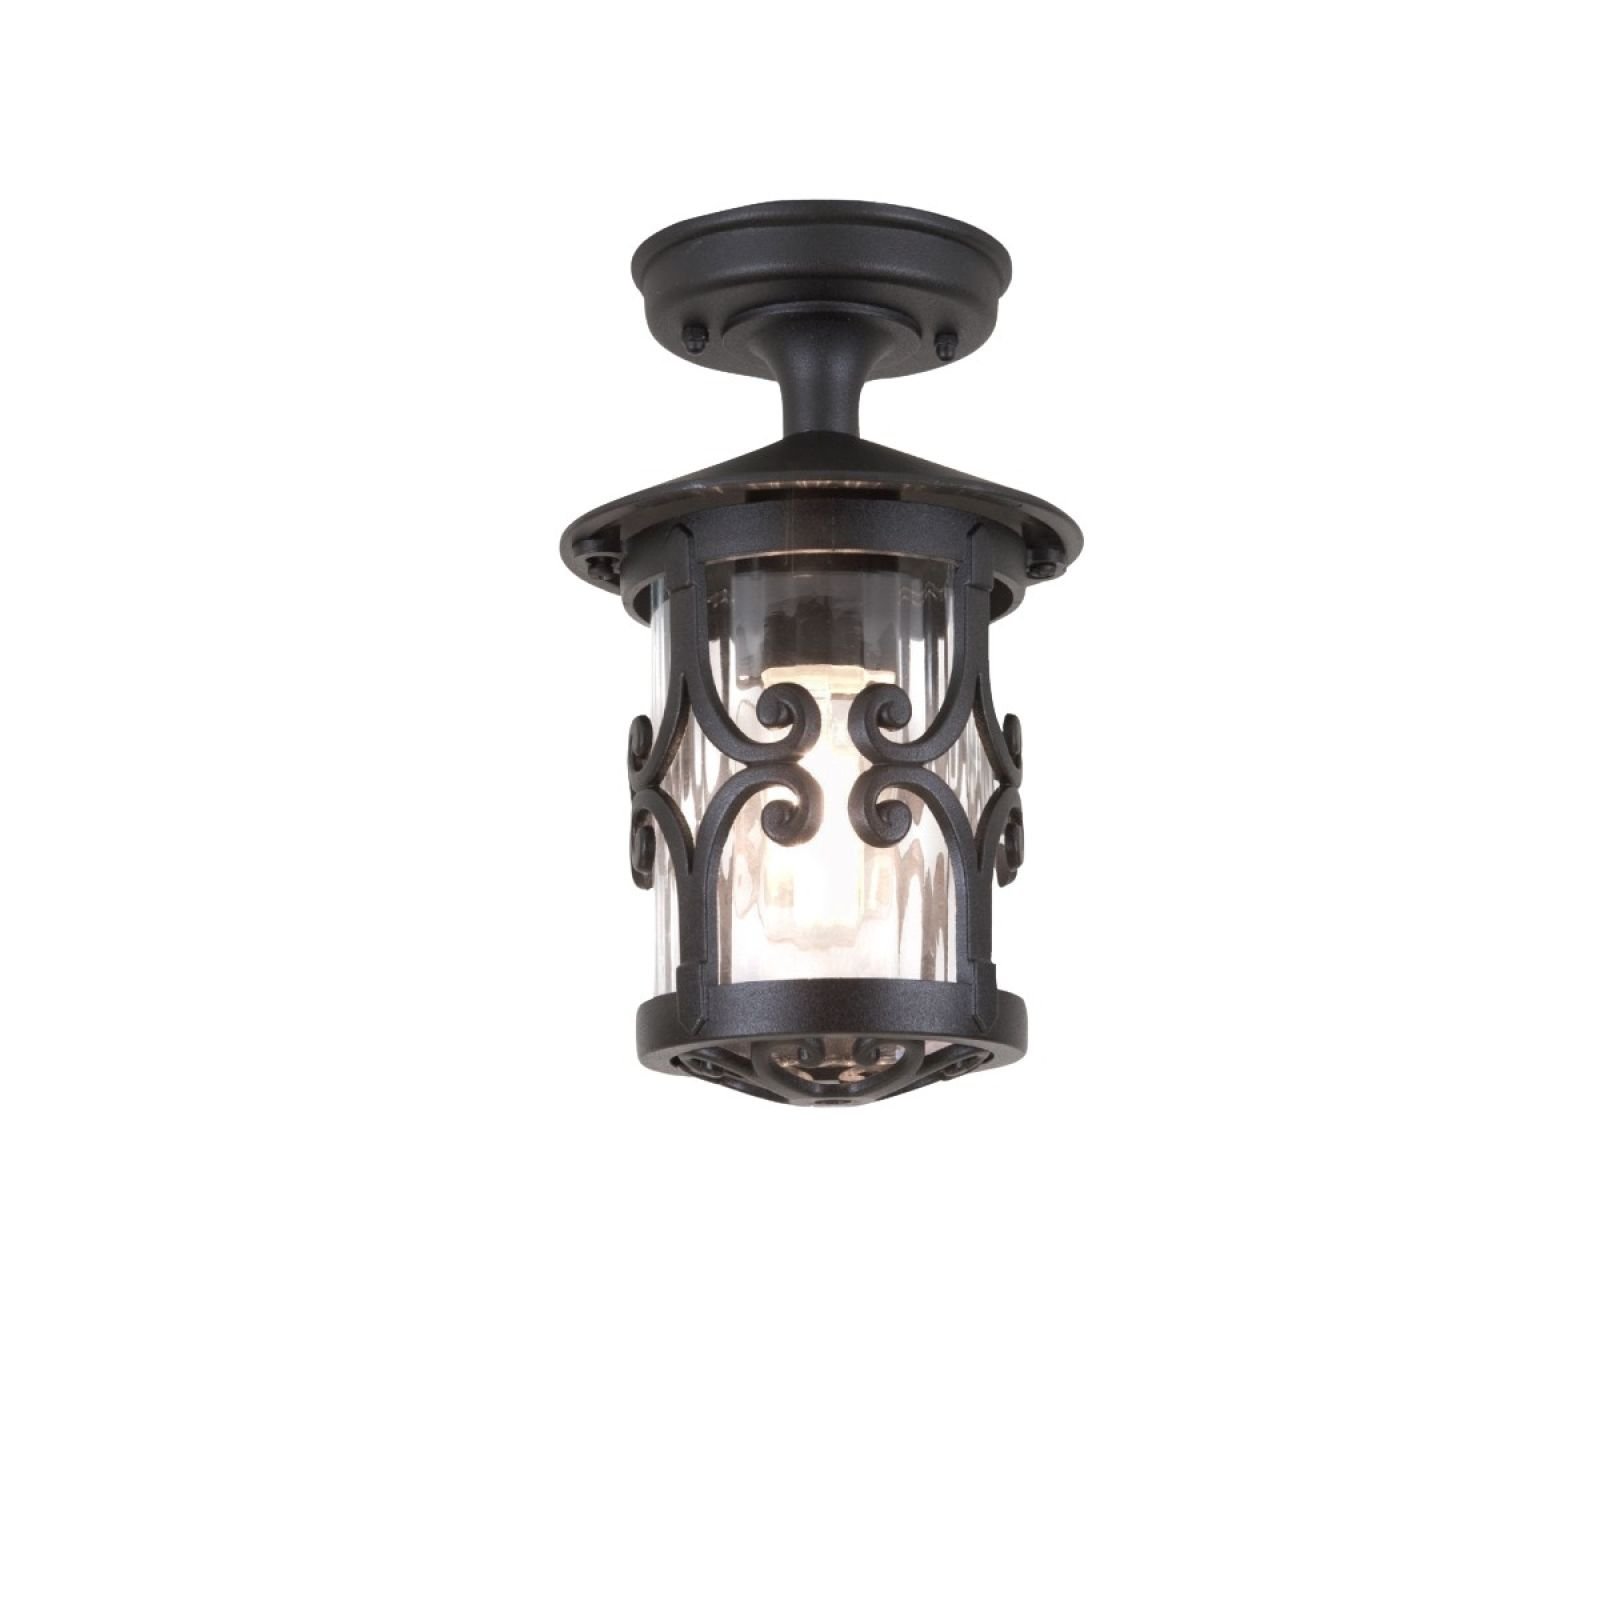 Hereford rigid tube lantern